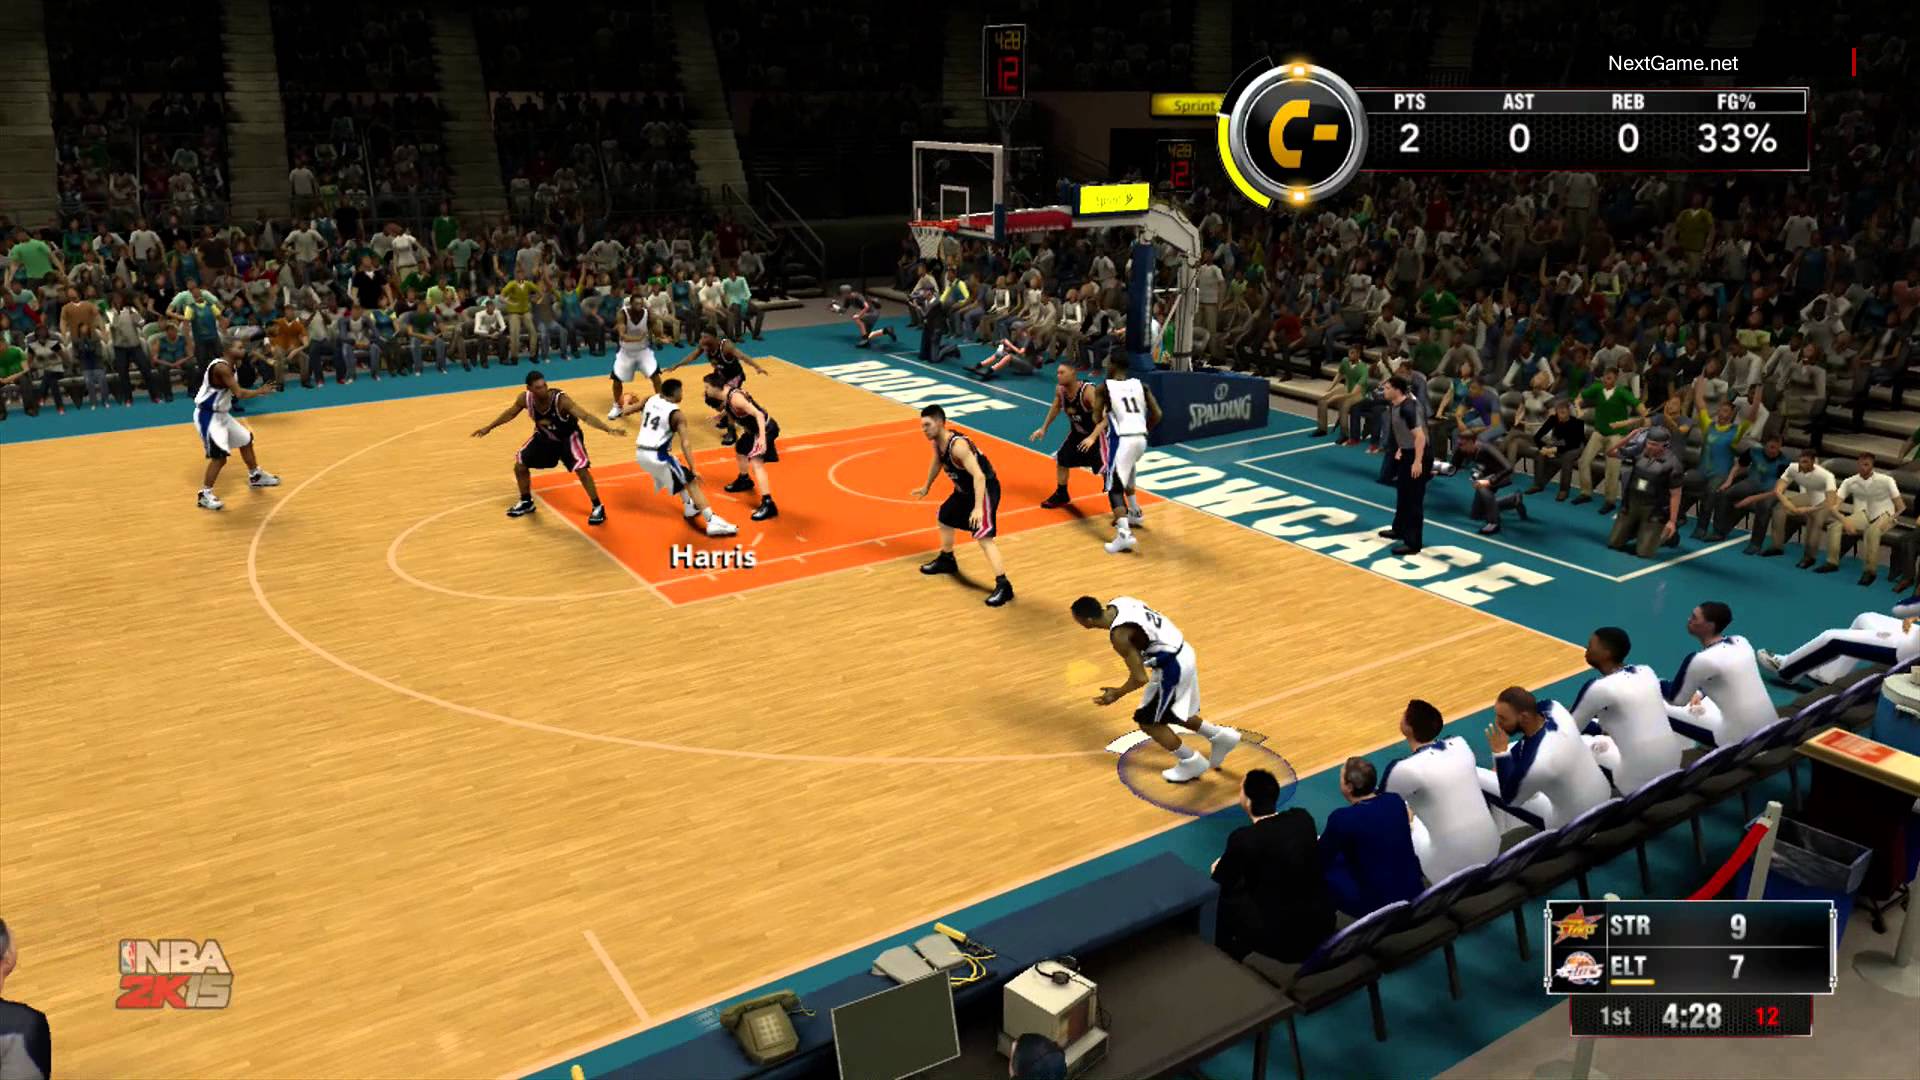 Go next game. NBA 2k15 геймплей. NBA 2k15 Xbox 360. NBA 2k15 Gameplay. NBA 2k15 (Xbox one).